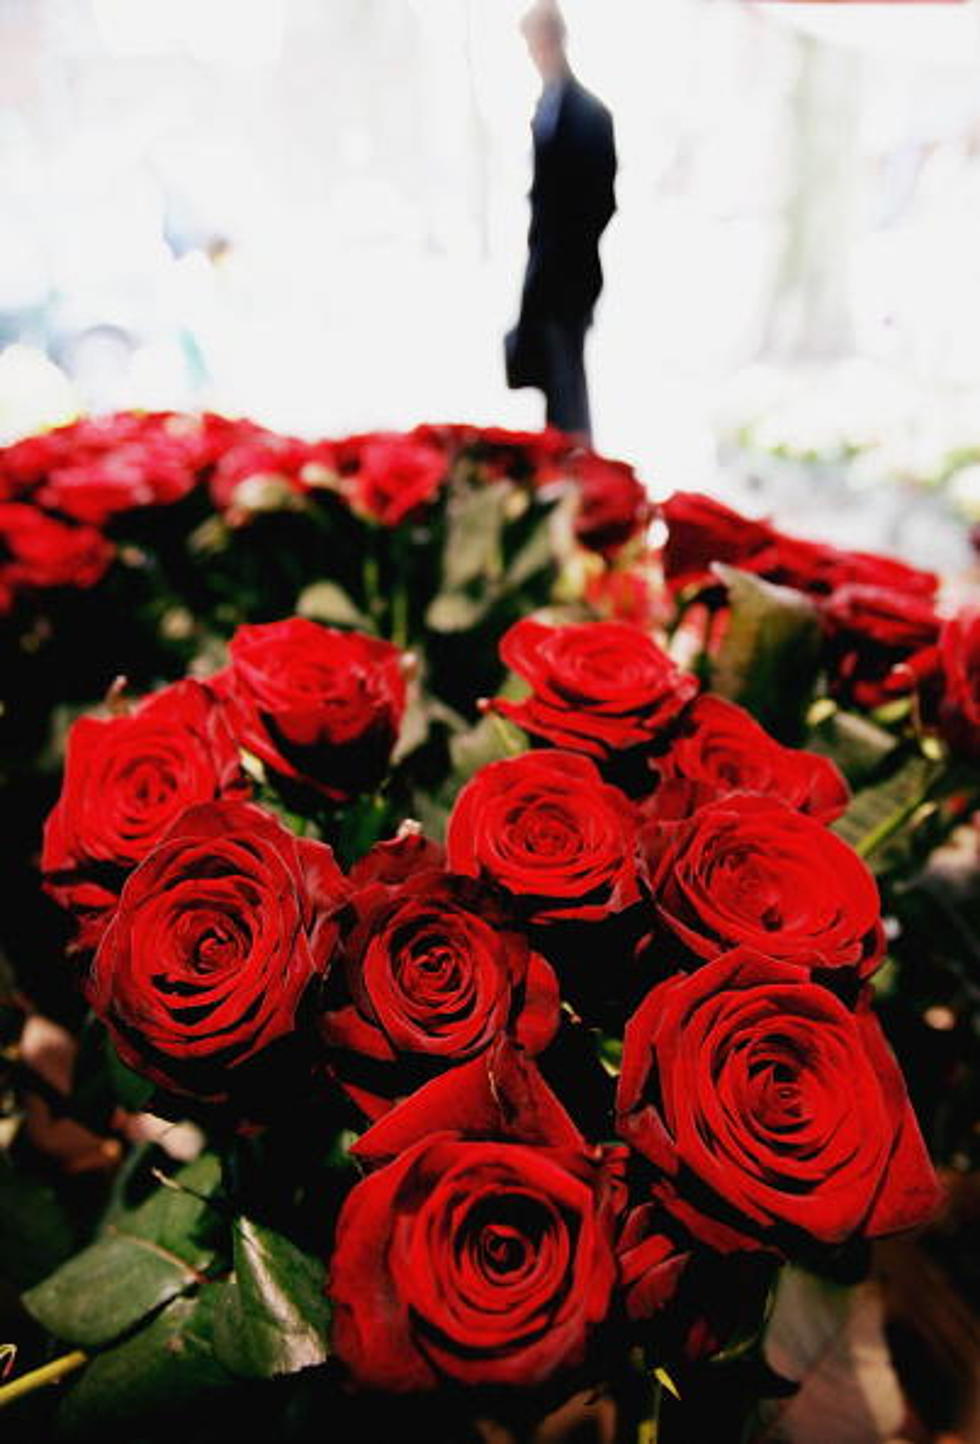 How To “Celebrate” Valentine’s Day Alone